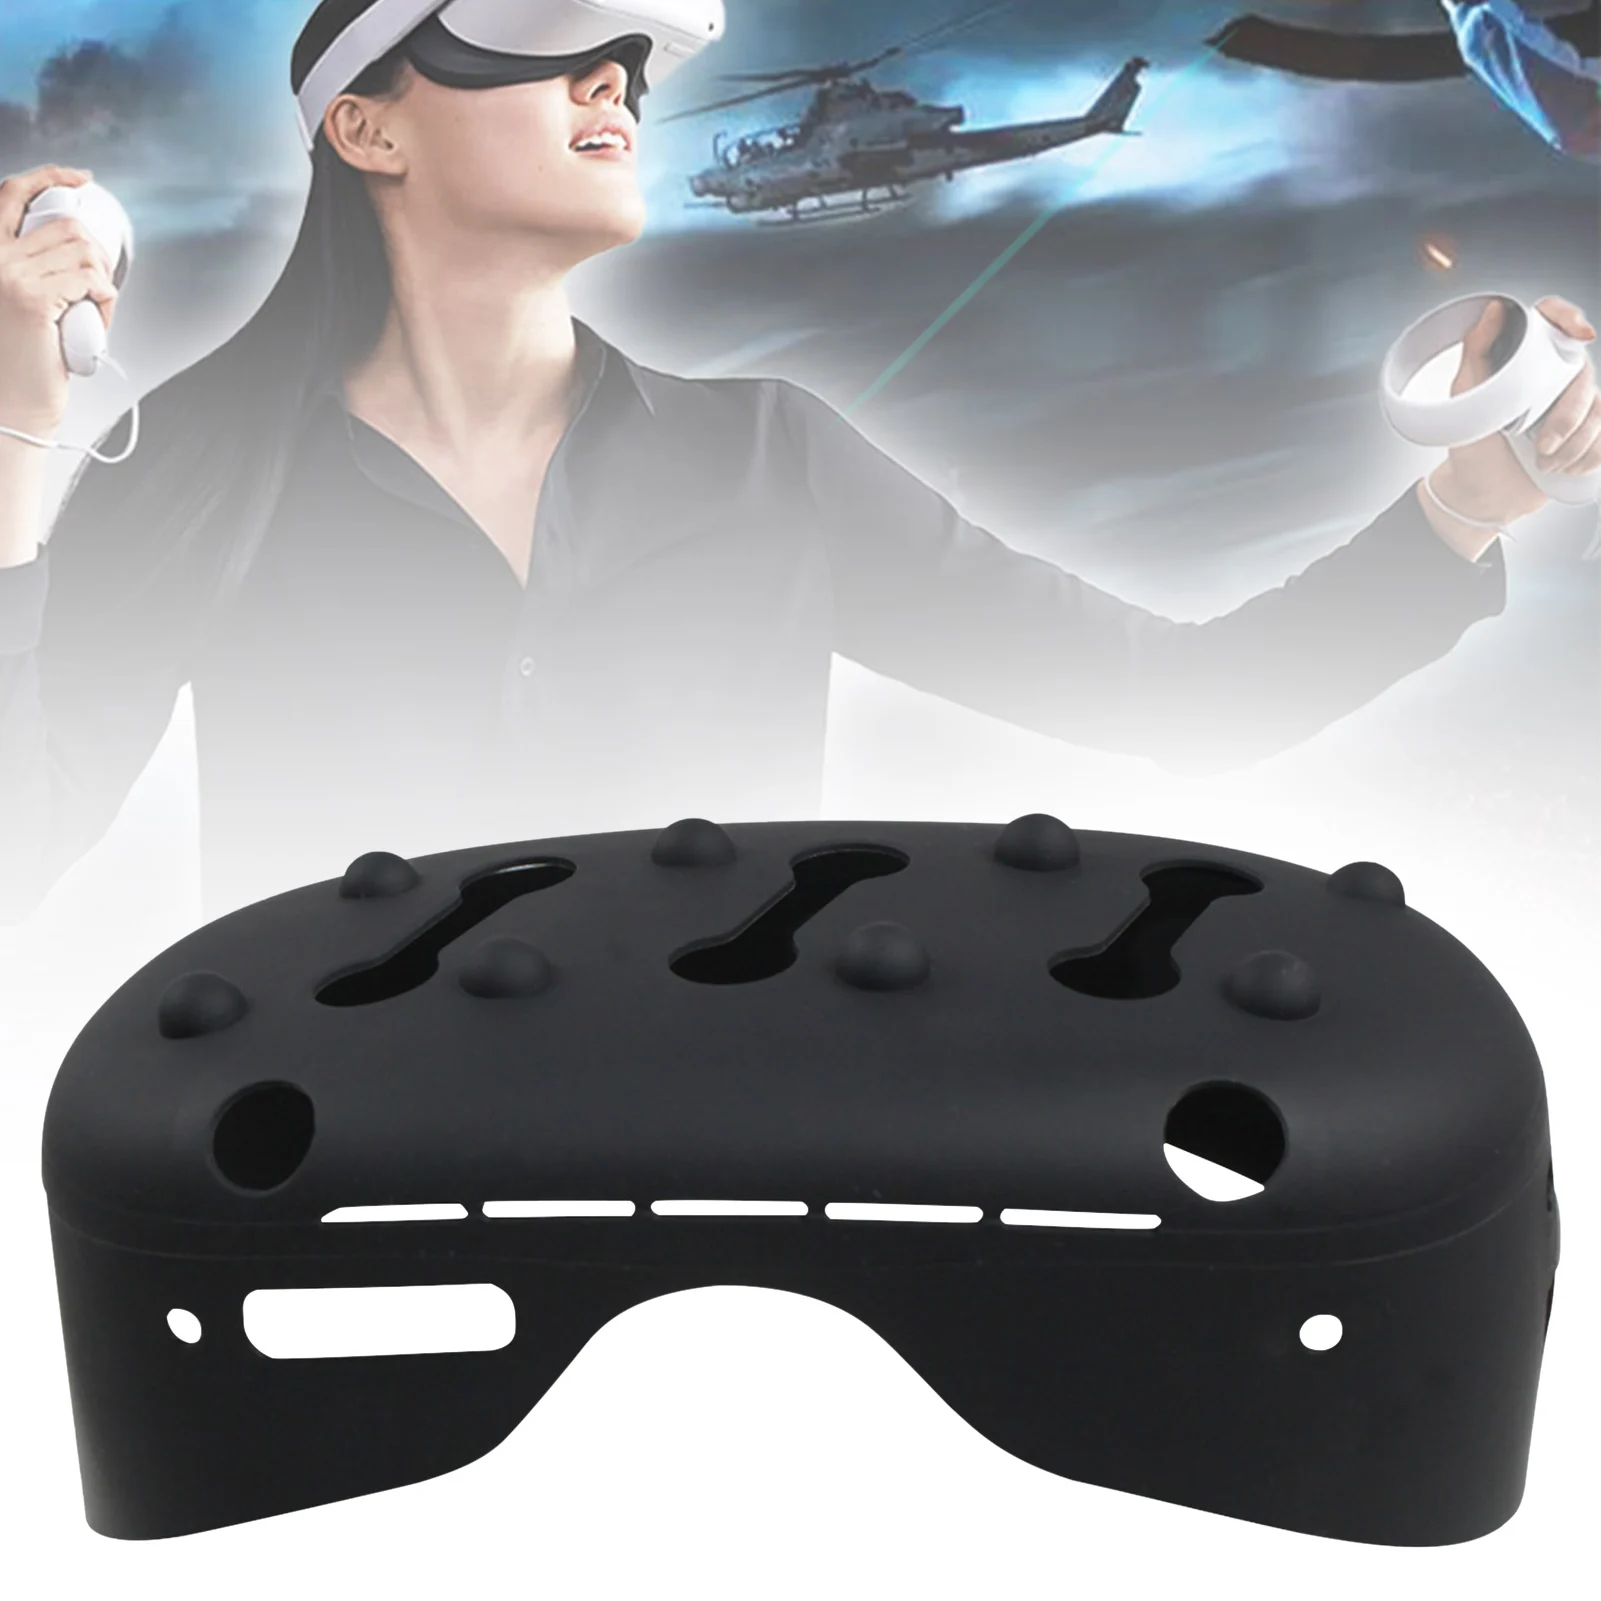 2021 Noua de Silicon Anti-zero VR Protecția Pielii Silicon Caz Acoperire Pentru -Oculus Quest 2 Shell Capac Protector Accesorii